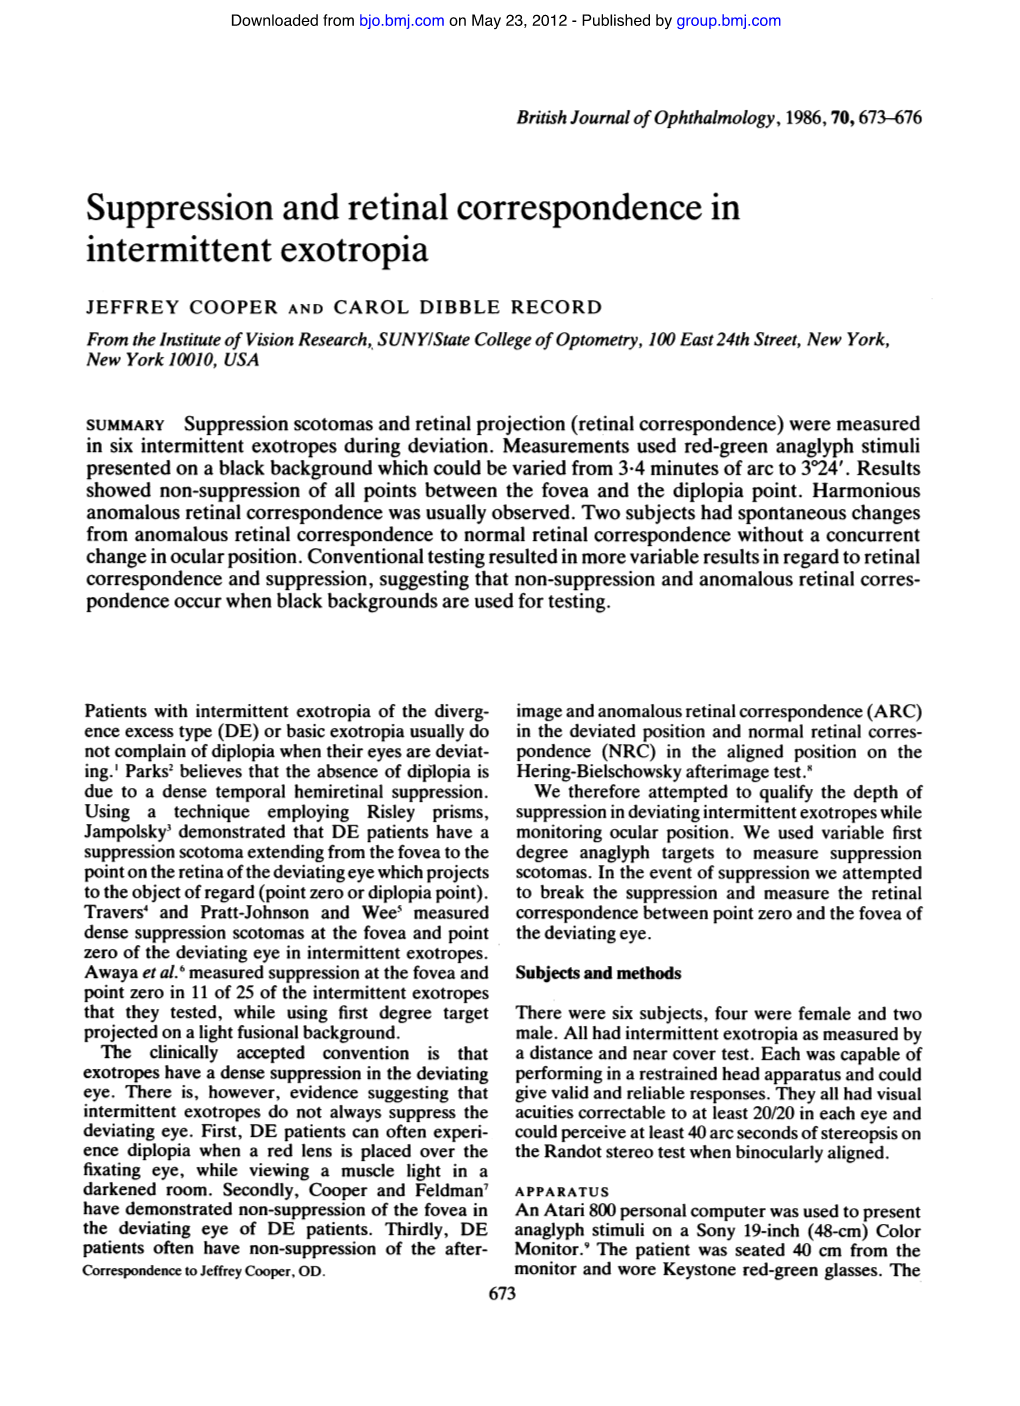 Suppression and Retinal Correspondence in Intermittent Exotropia